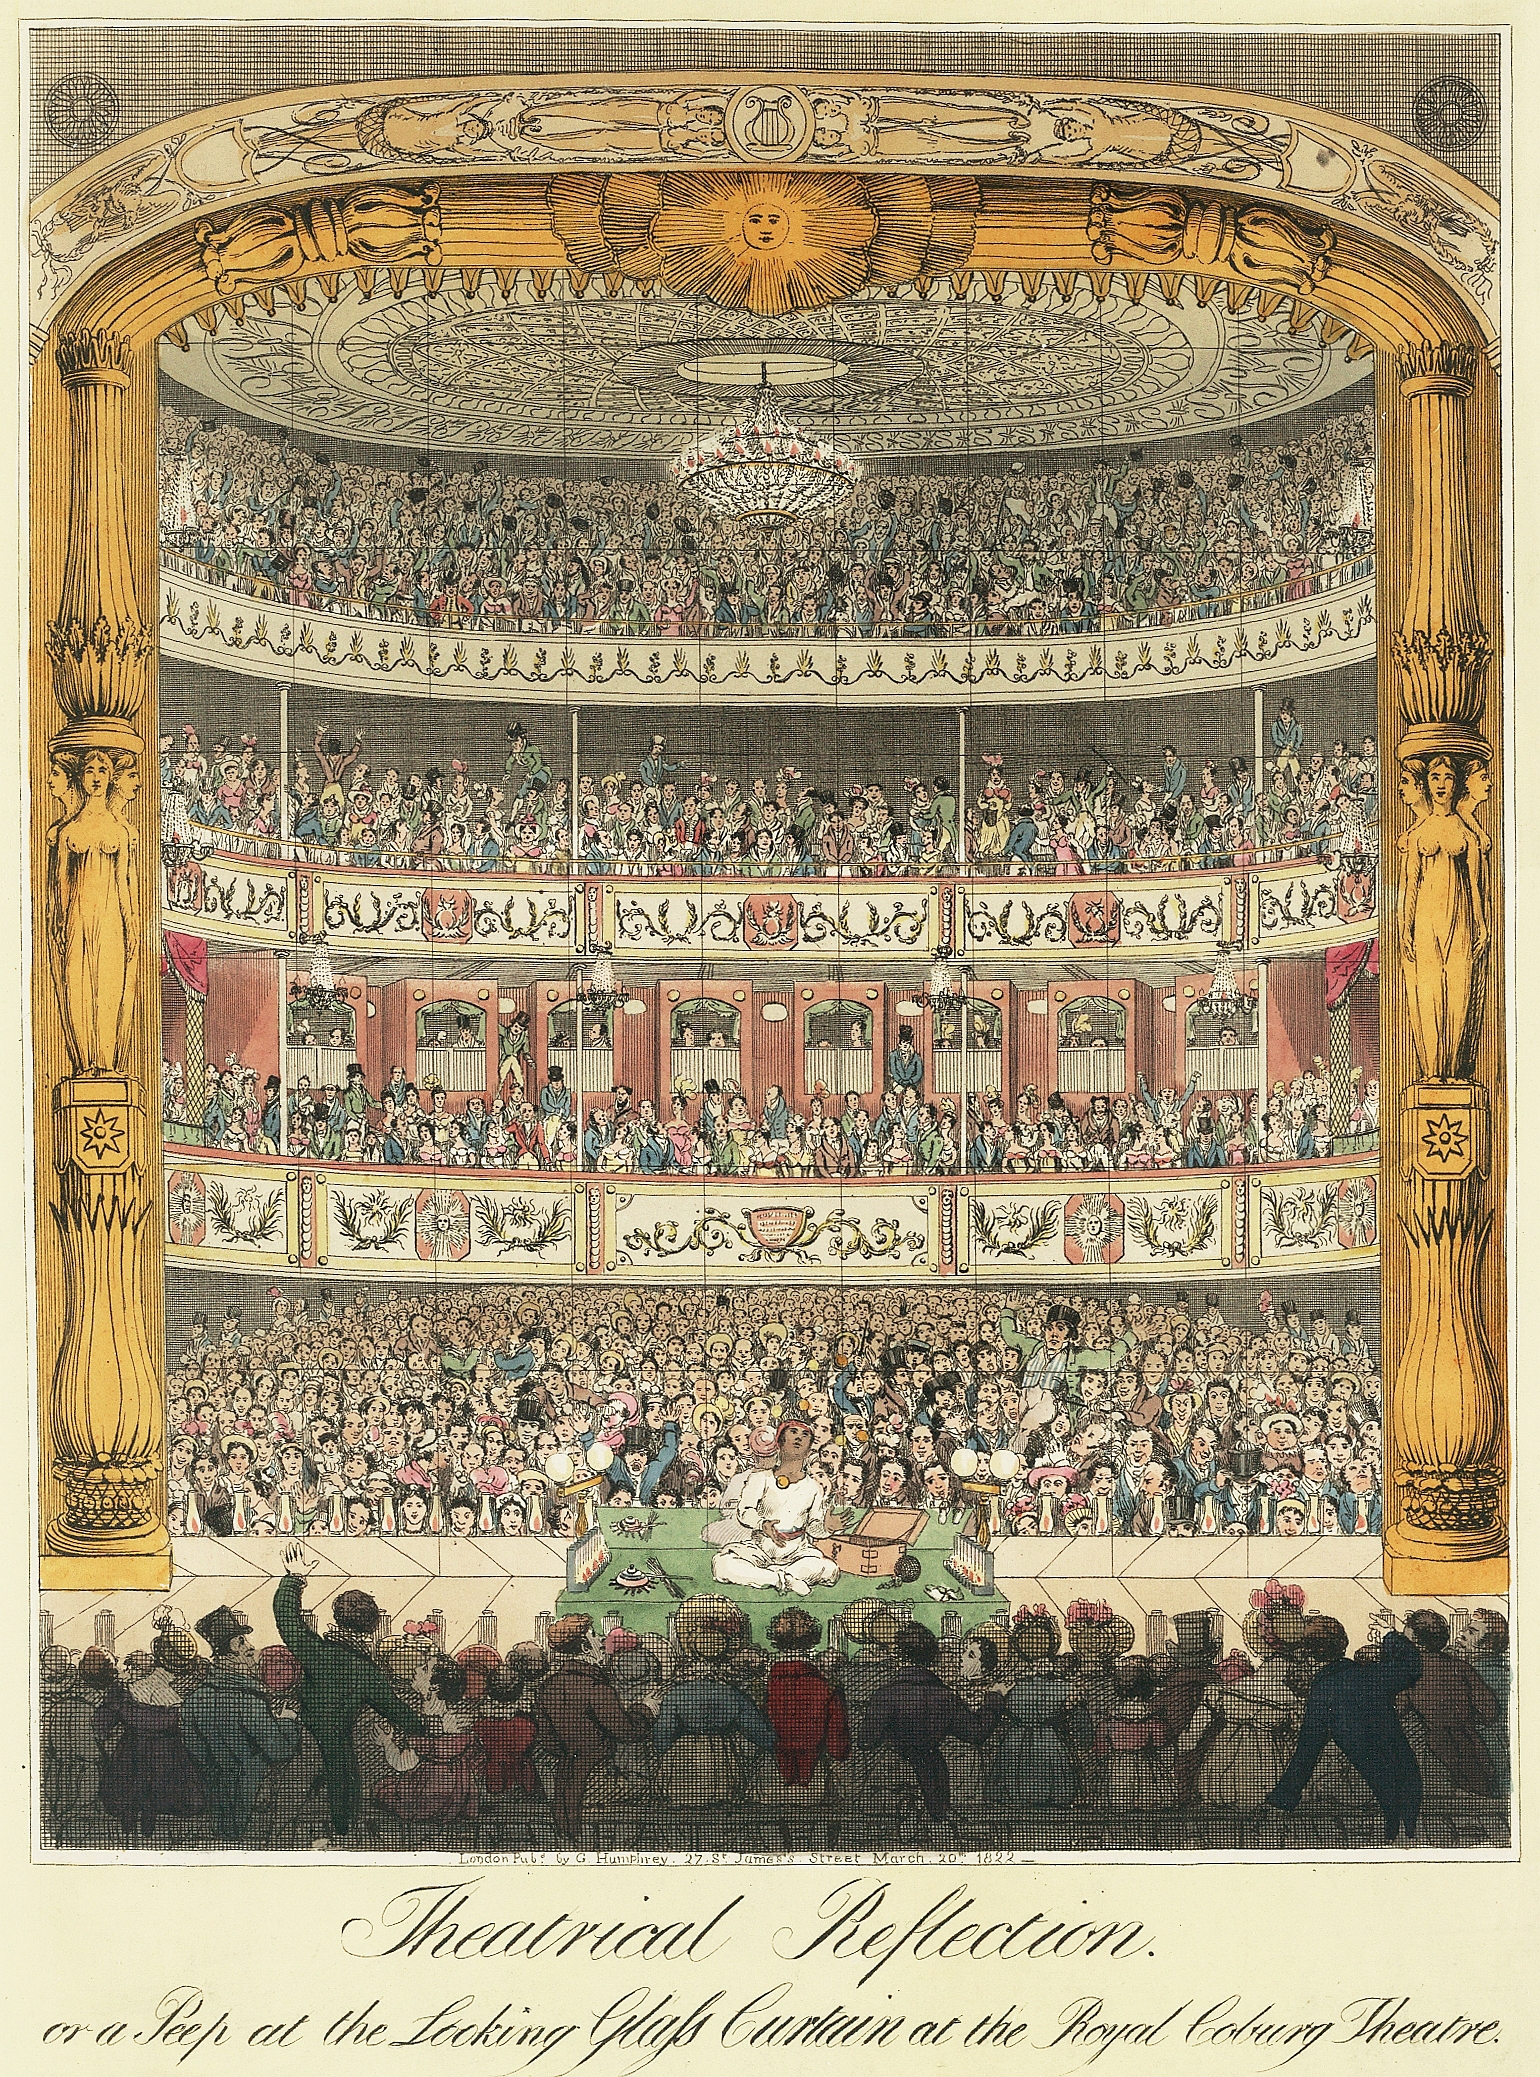 Royal Coburg Theatre 1822